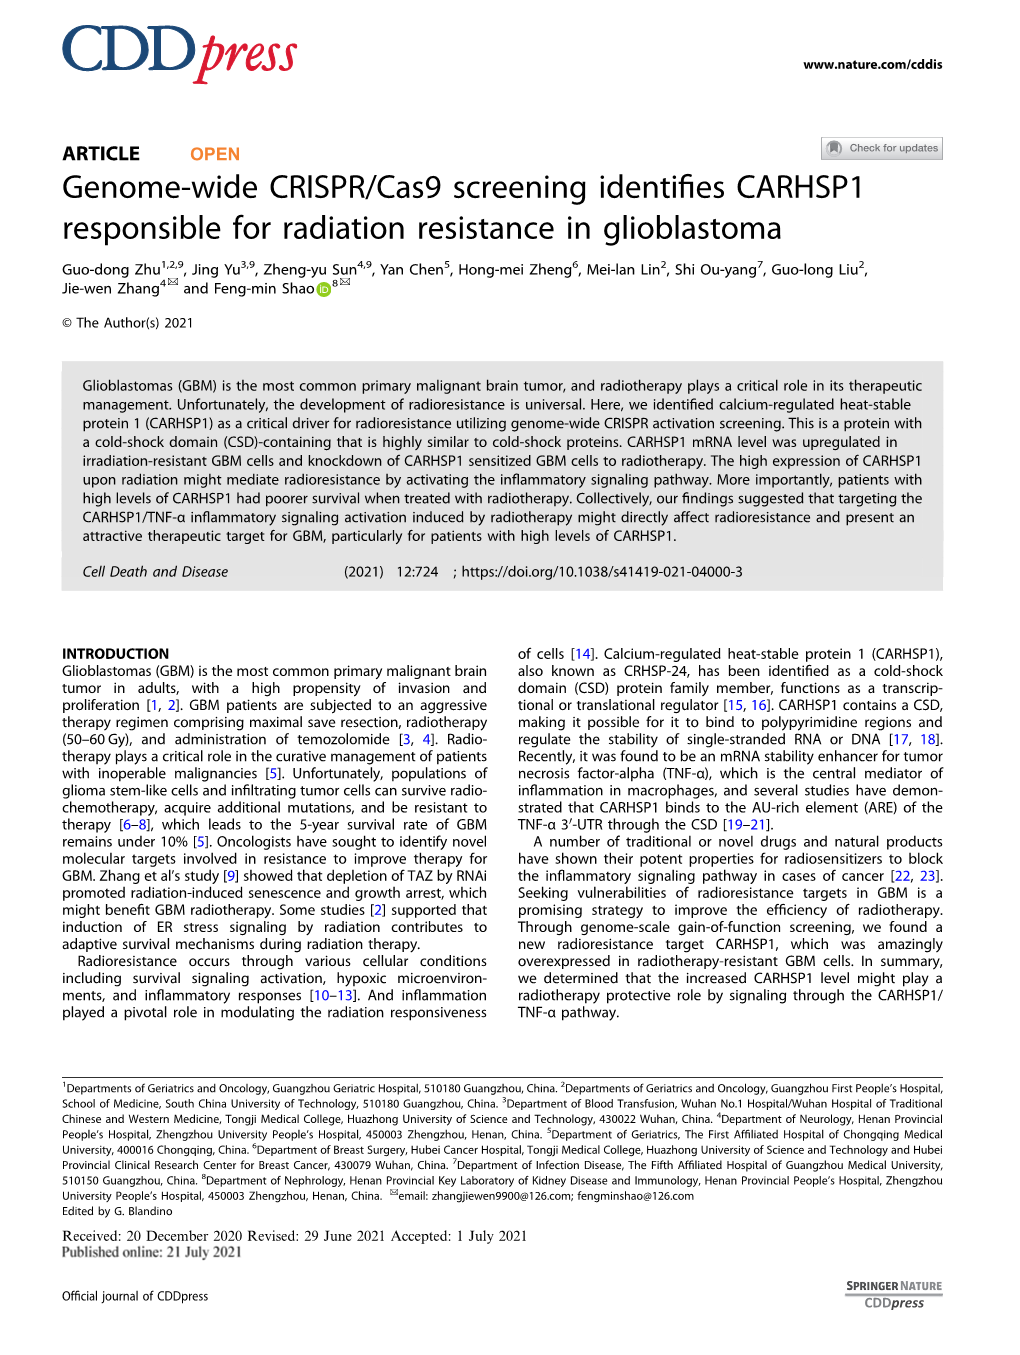 Genome-Wide CRISPR/Cas9 Screening Identifies CARHSP1 Responsible for Radiation Resistance in Glioblastoma